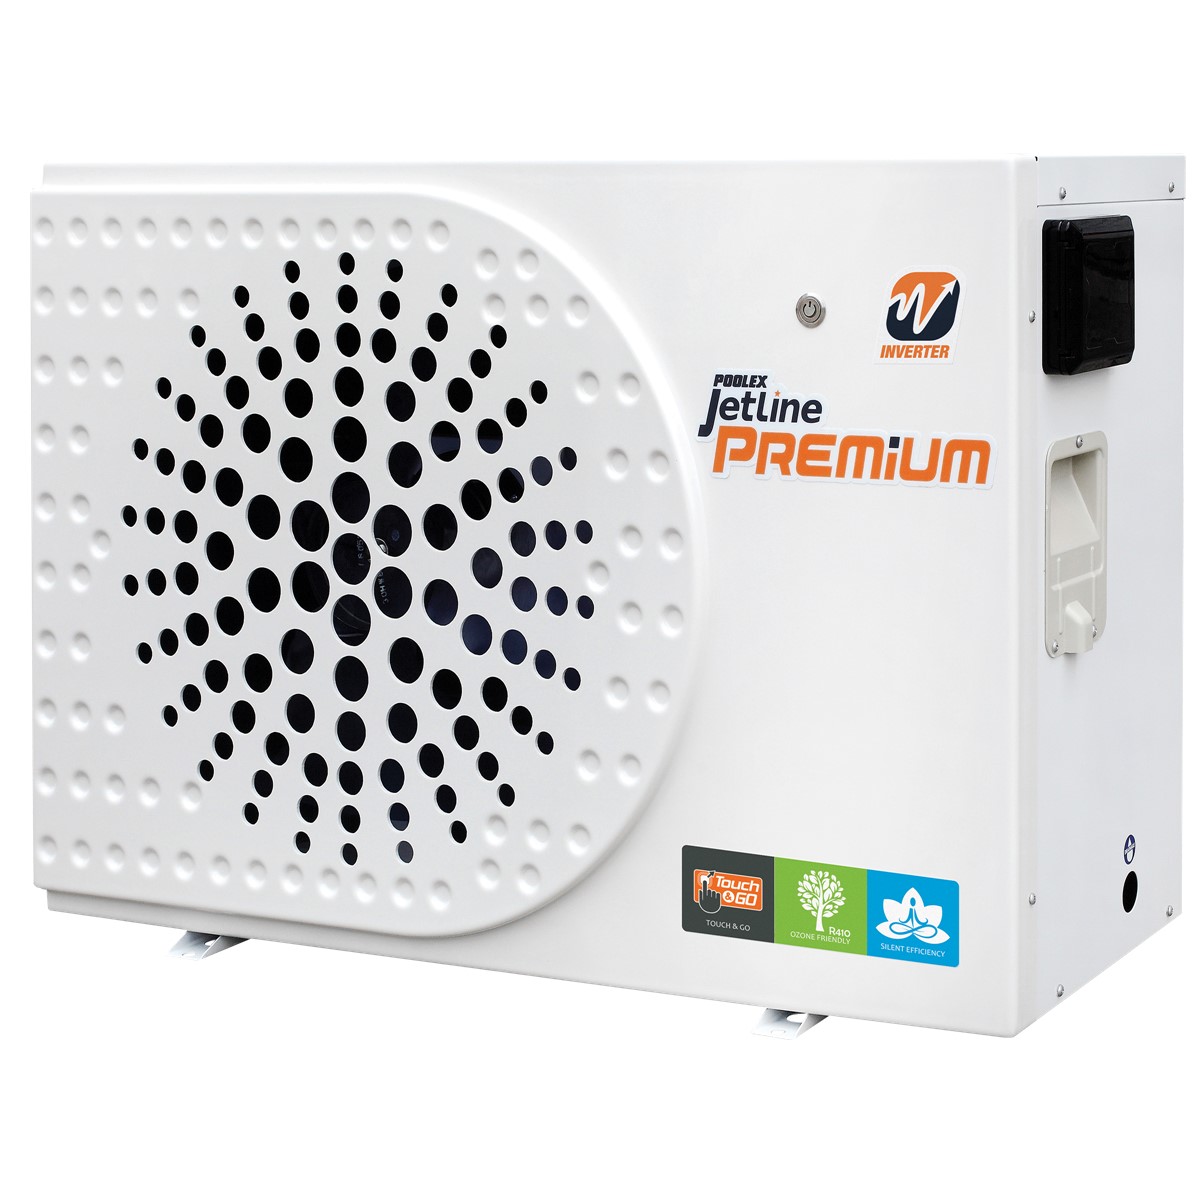 Pompe à chaleur Poolex Jetline Premium Inverter WiFi